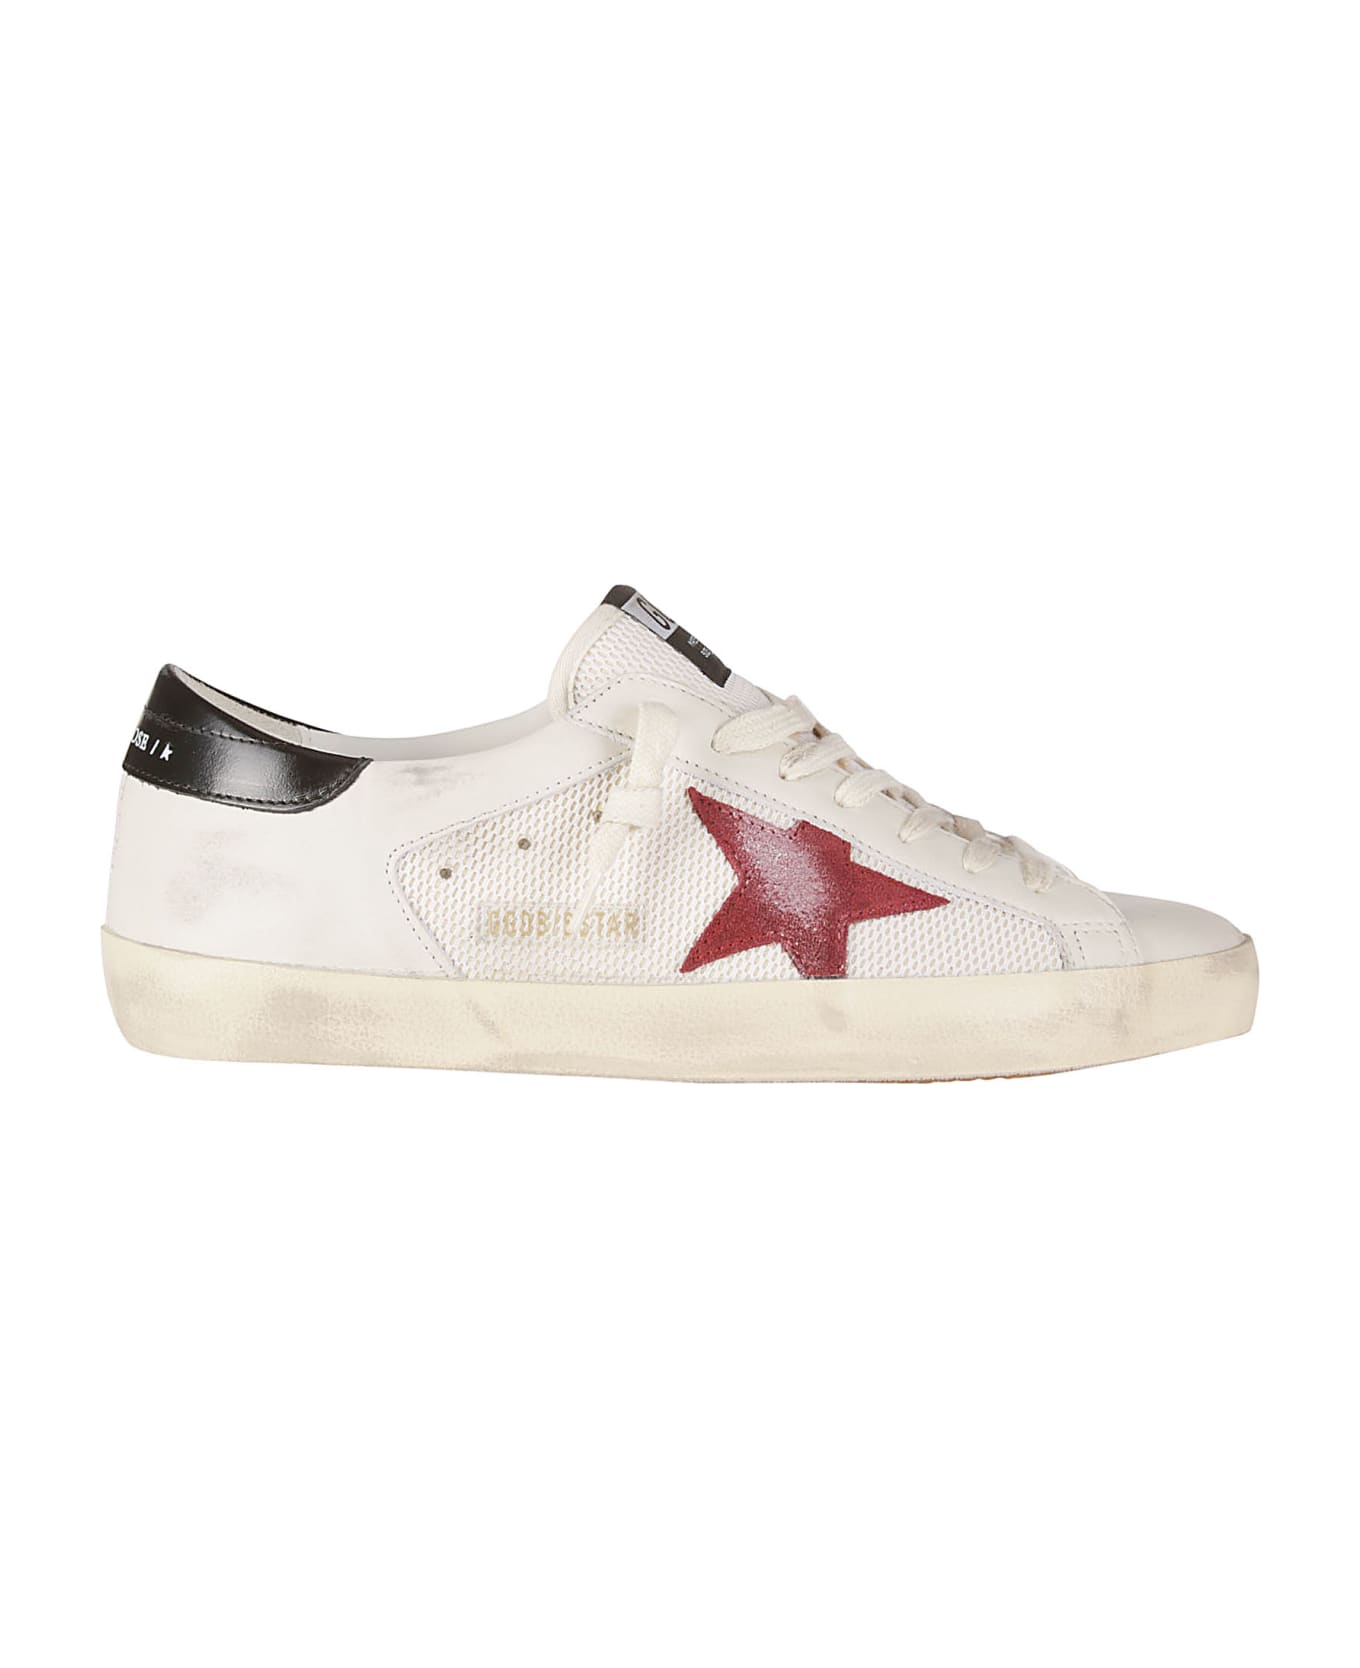 Golden Goose Super Star Sneakers - WHITE/POMEGRANATE/BLACK